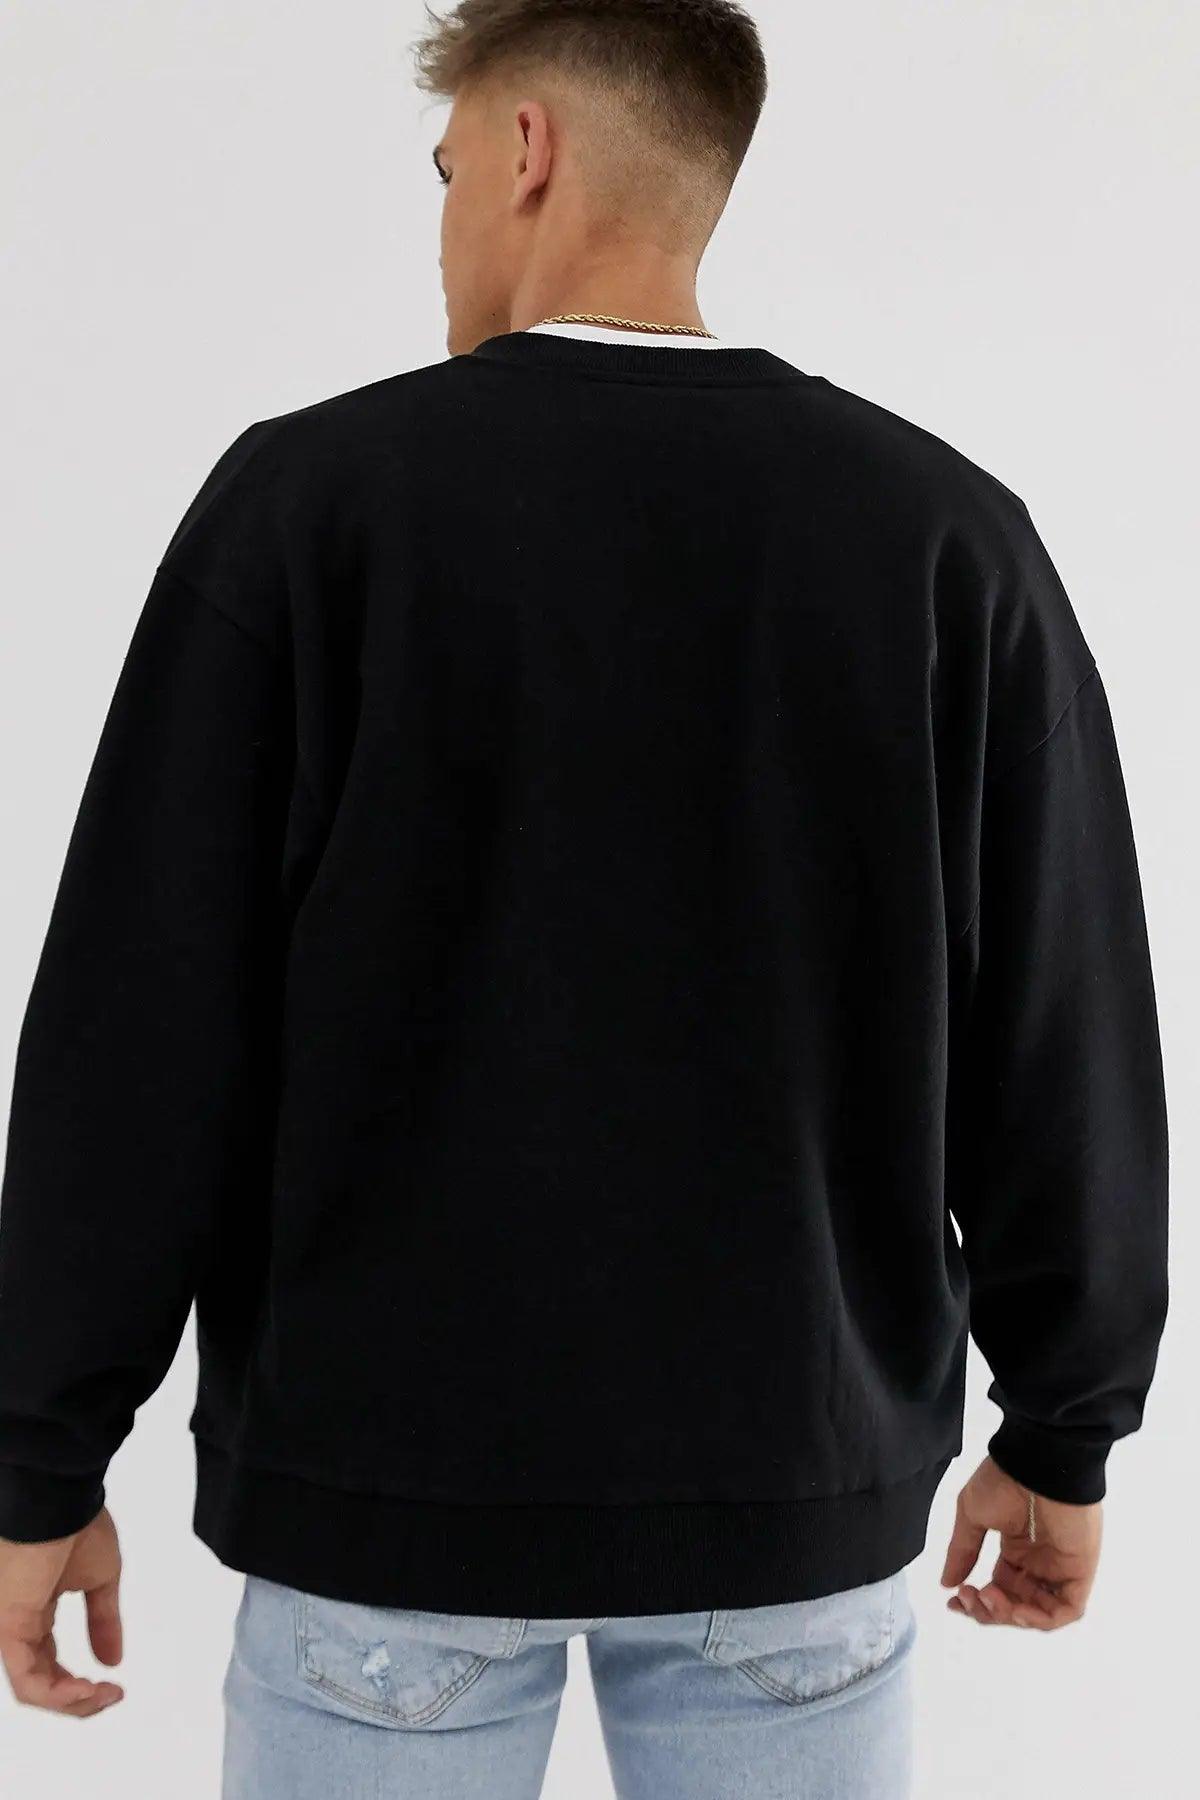 The Rich Oversize Erkek Sweatshirt - PΛSΛGE